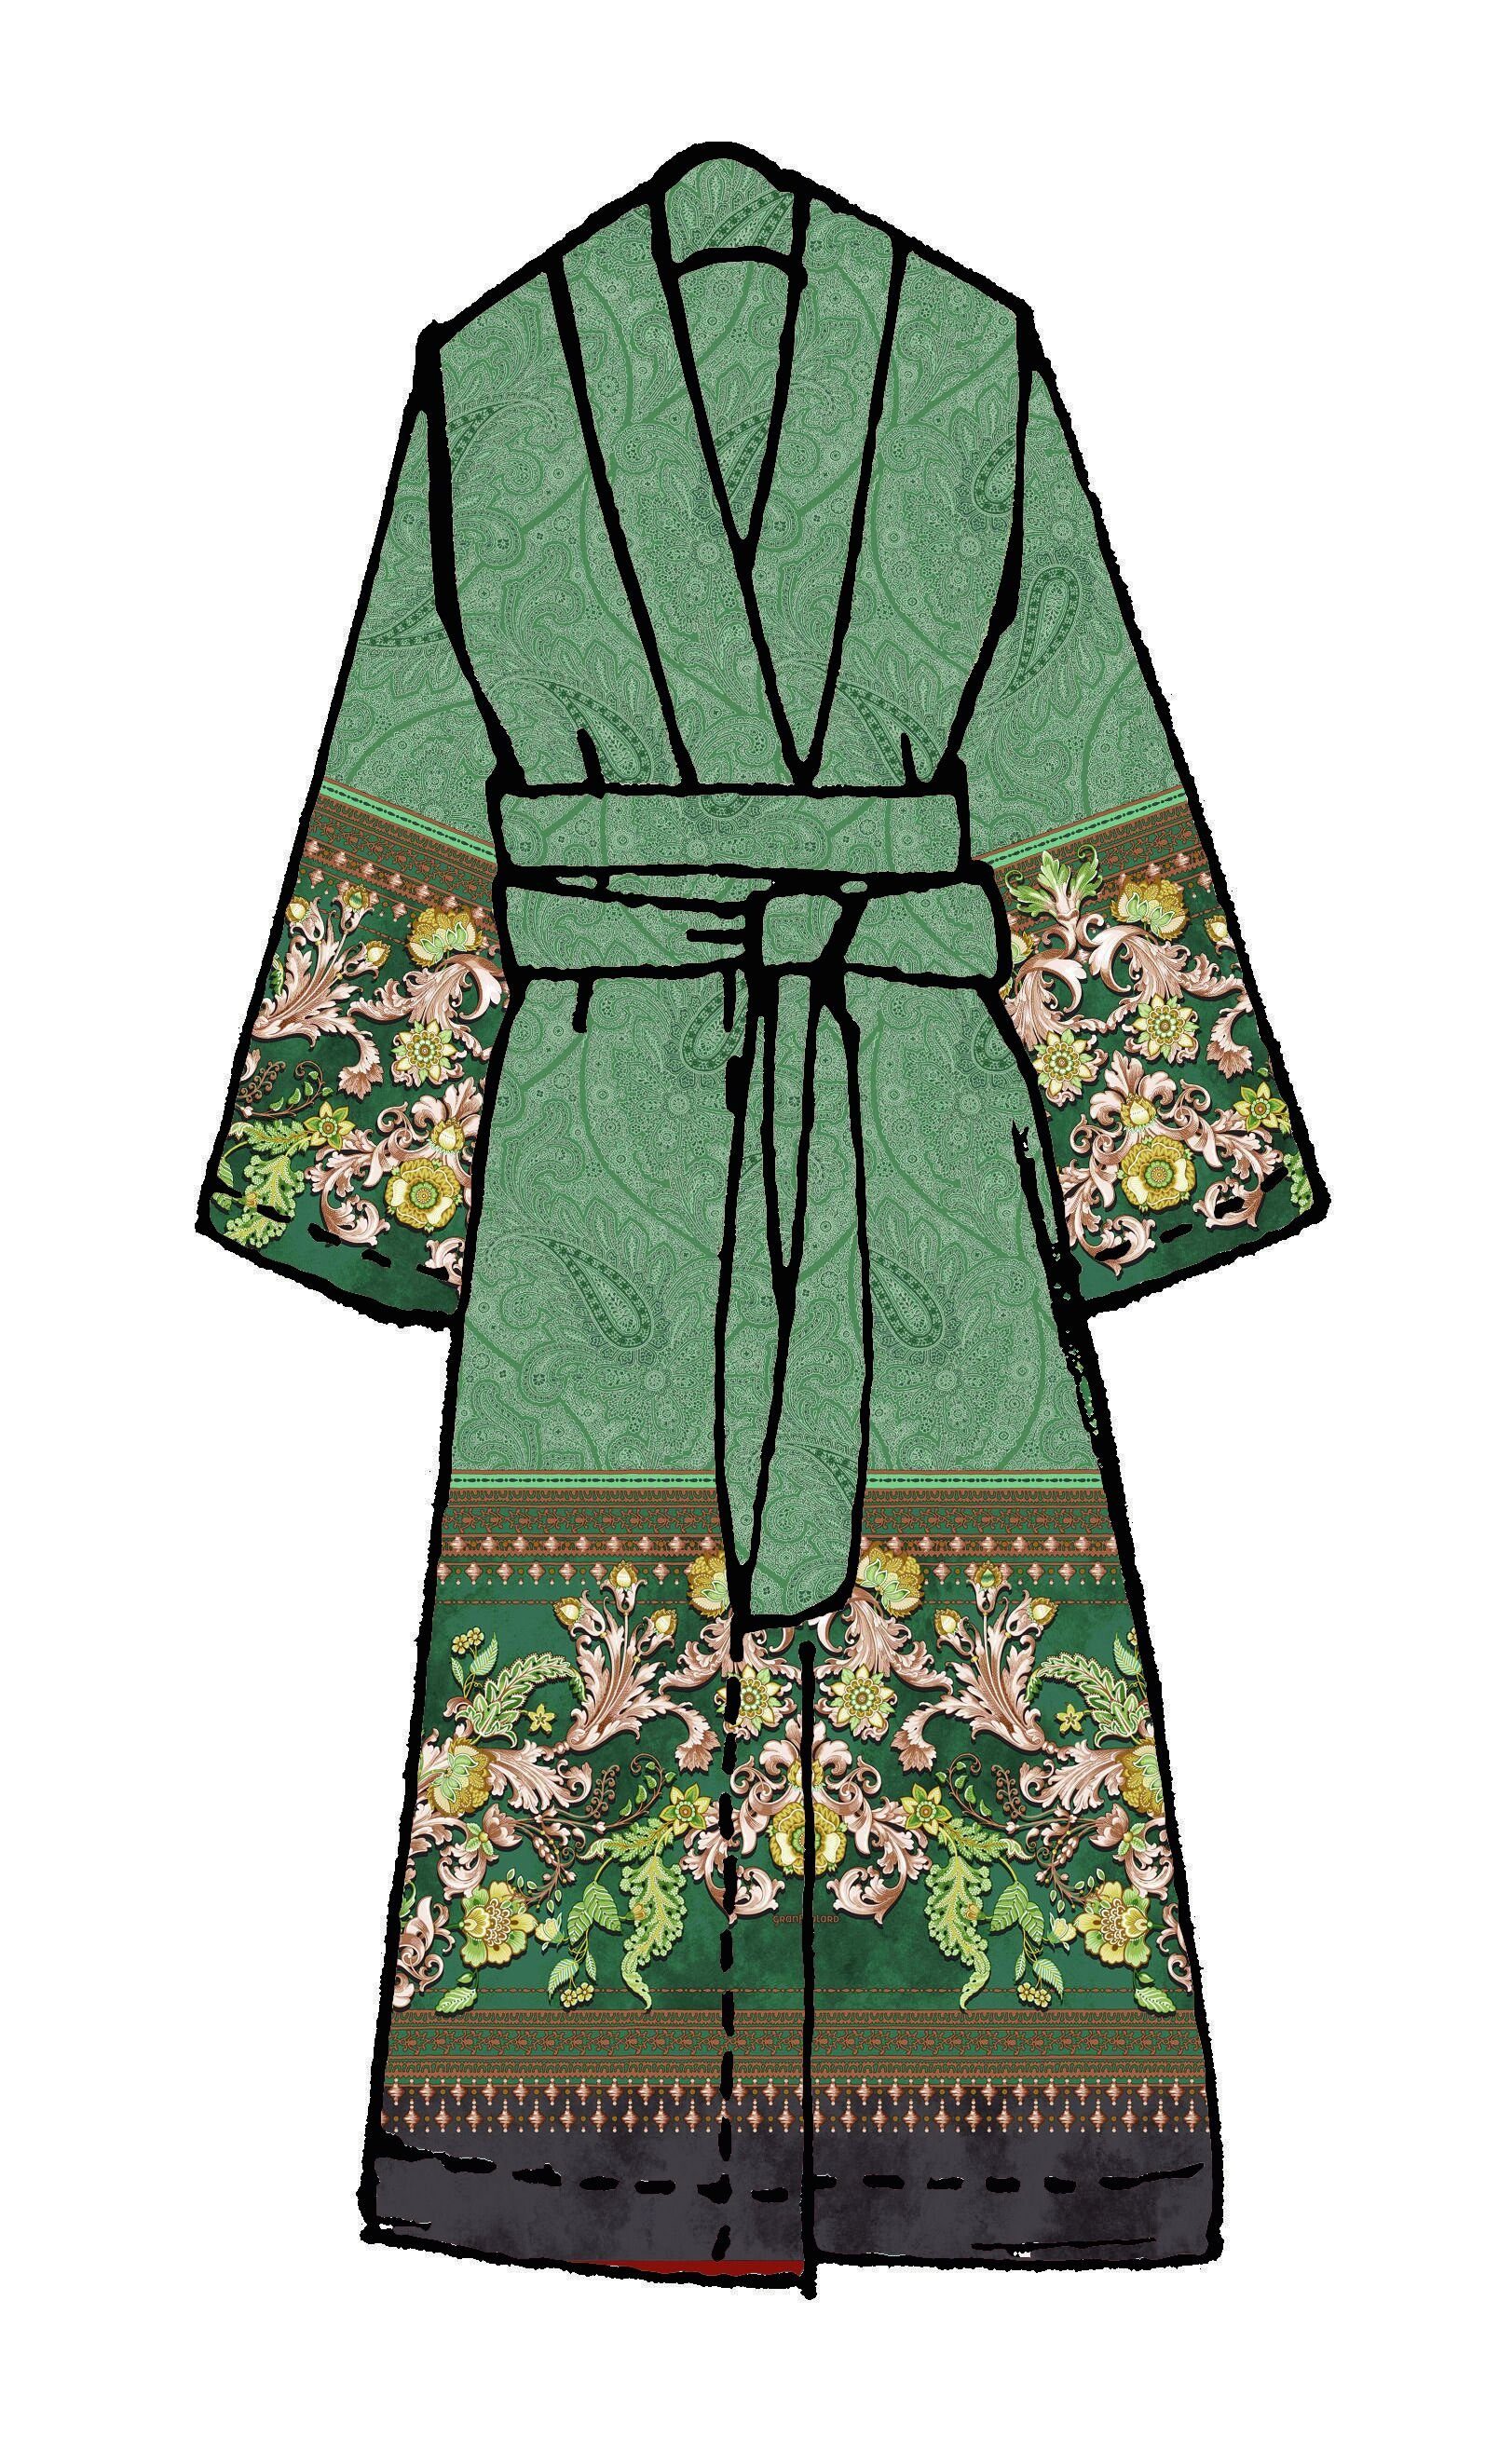 Baumwolle, Kimono Gürtel Bassetti TUSCANIA, GRÜN wadenlang,